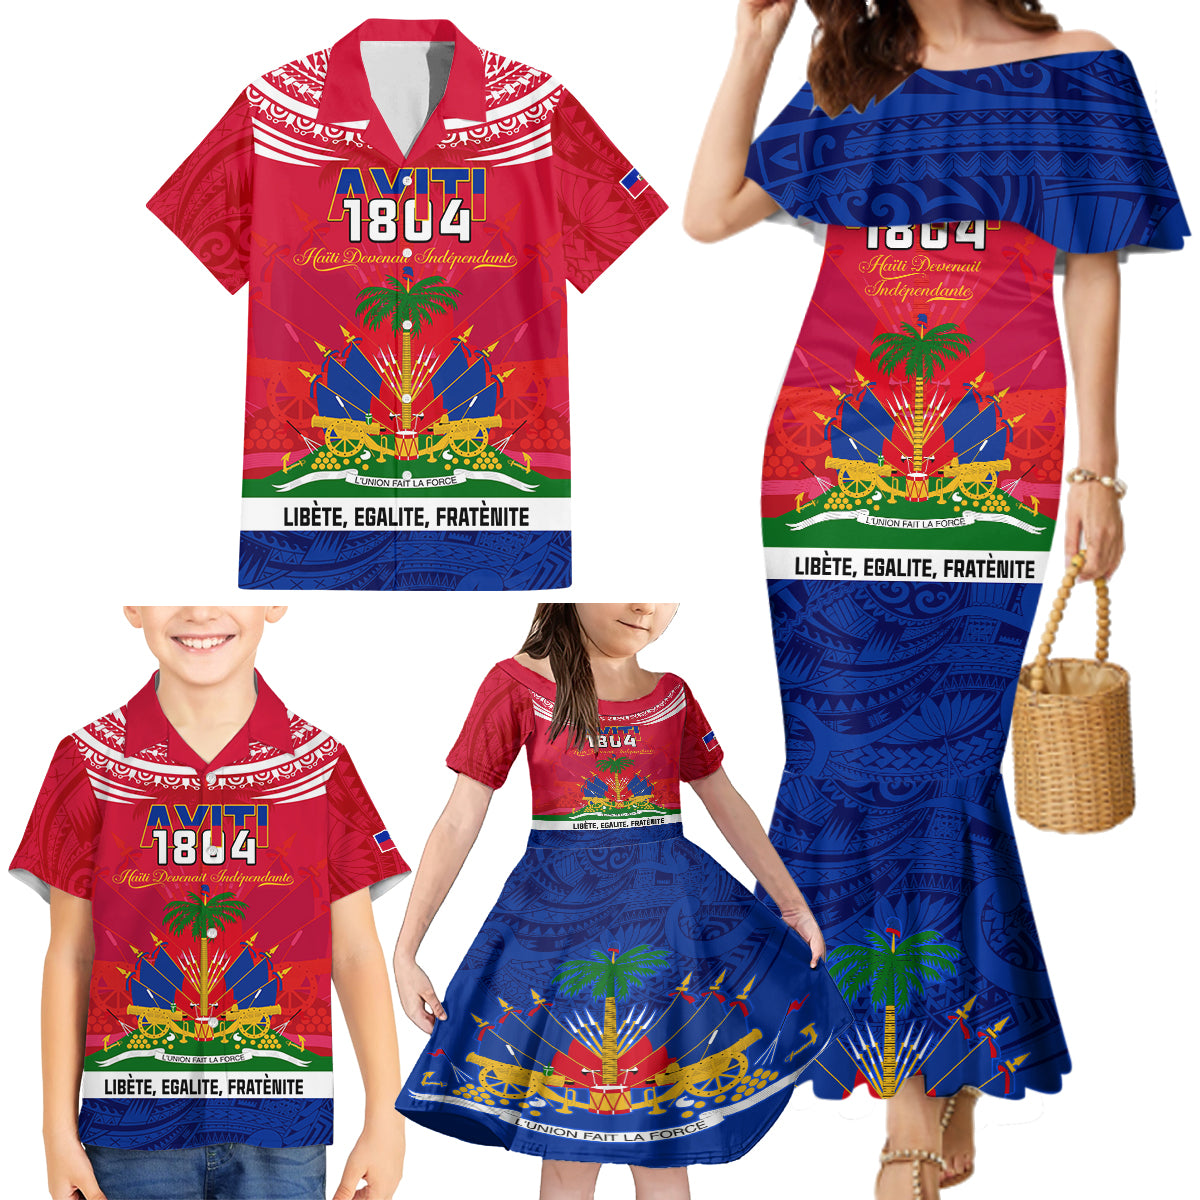 haiti-independence-day-family-matching-mermaid-dress-and-hawaiian-shirt-libete-egalite-fratenite-ayiti-1804-with-polynesian-pattern